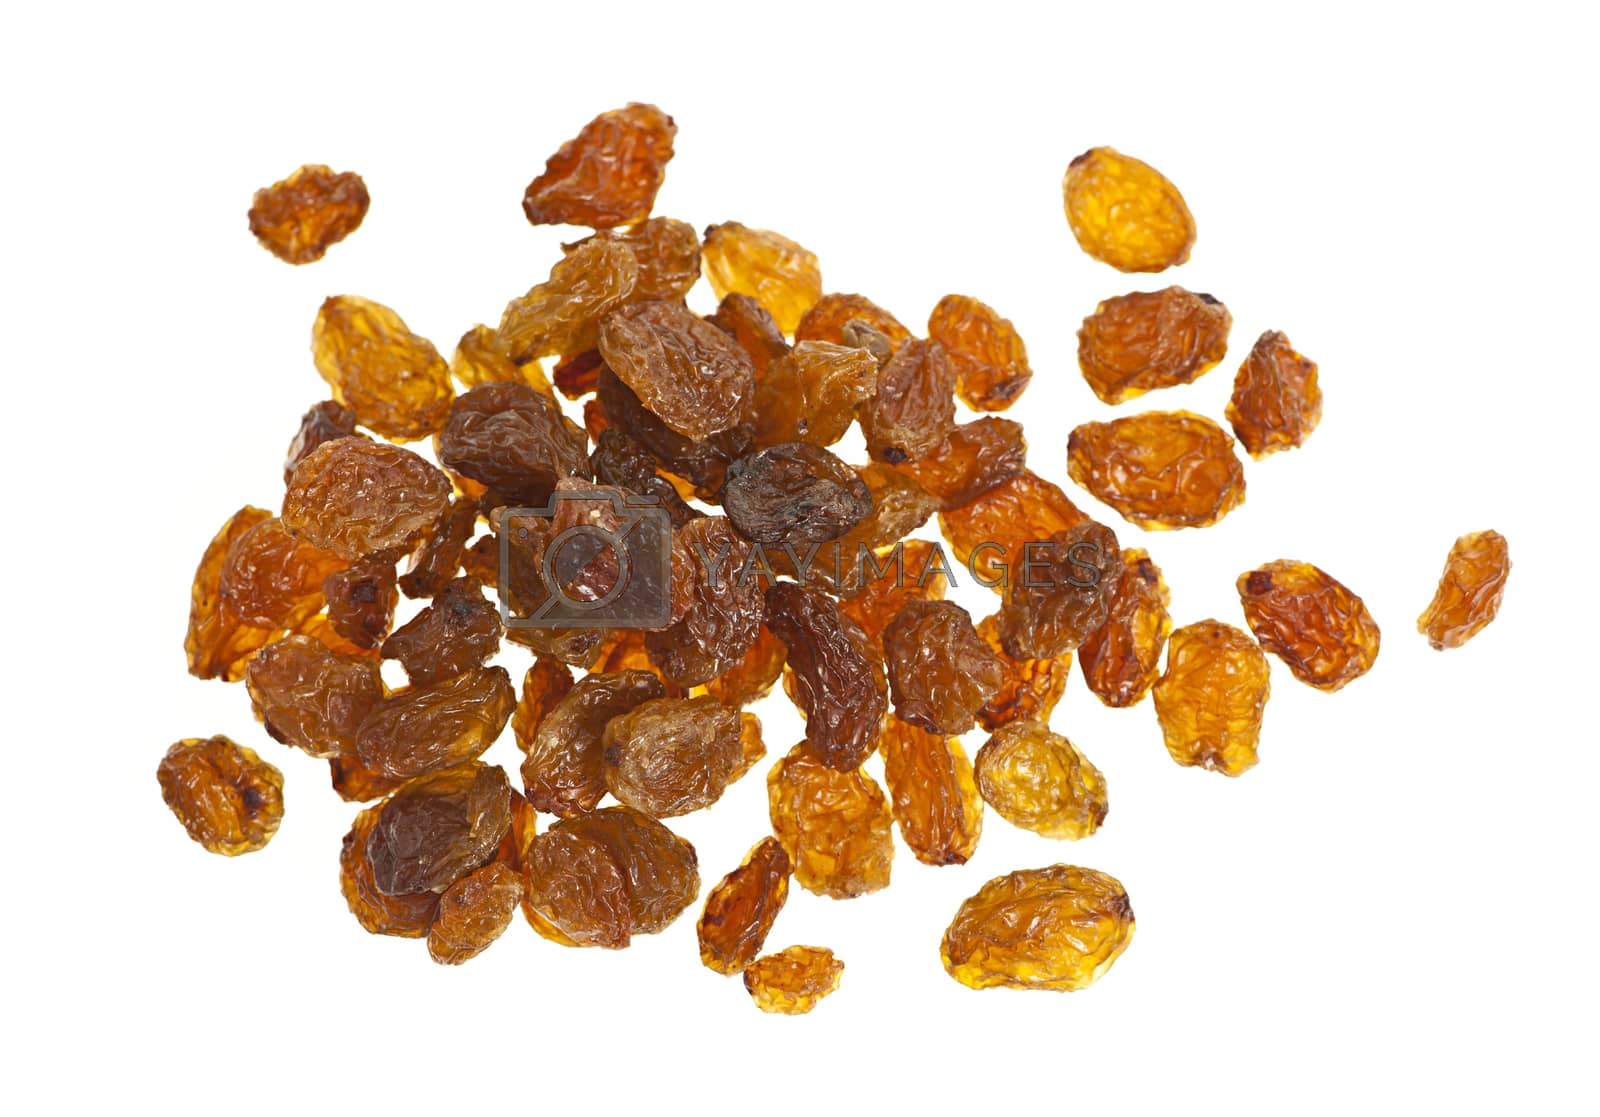 Royalty free image of Pile of yellow sultana raisins on white by elenathewise